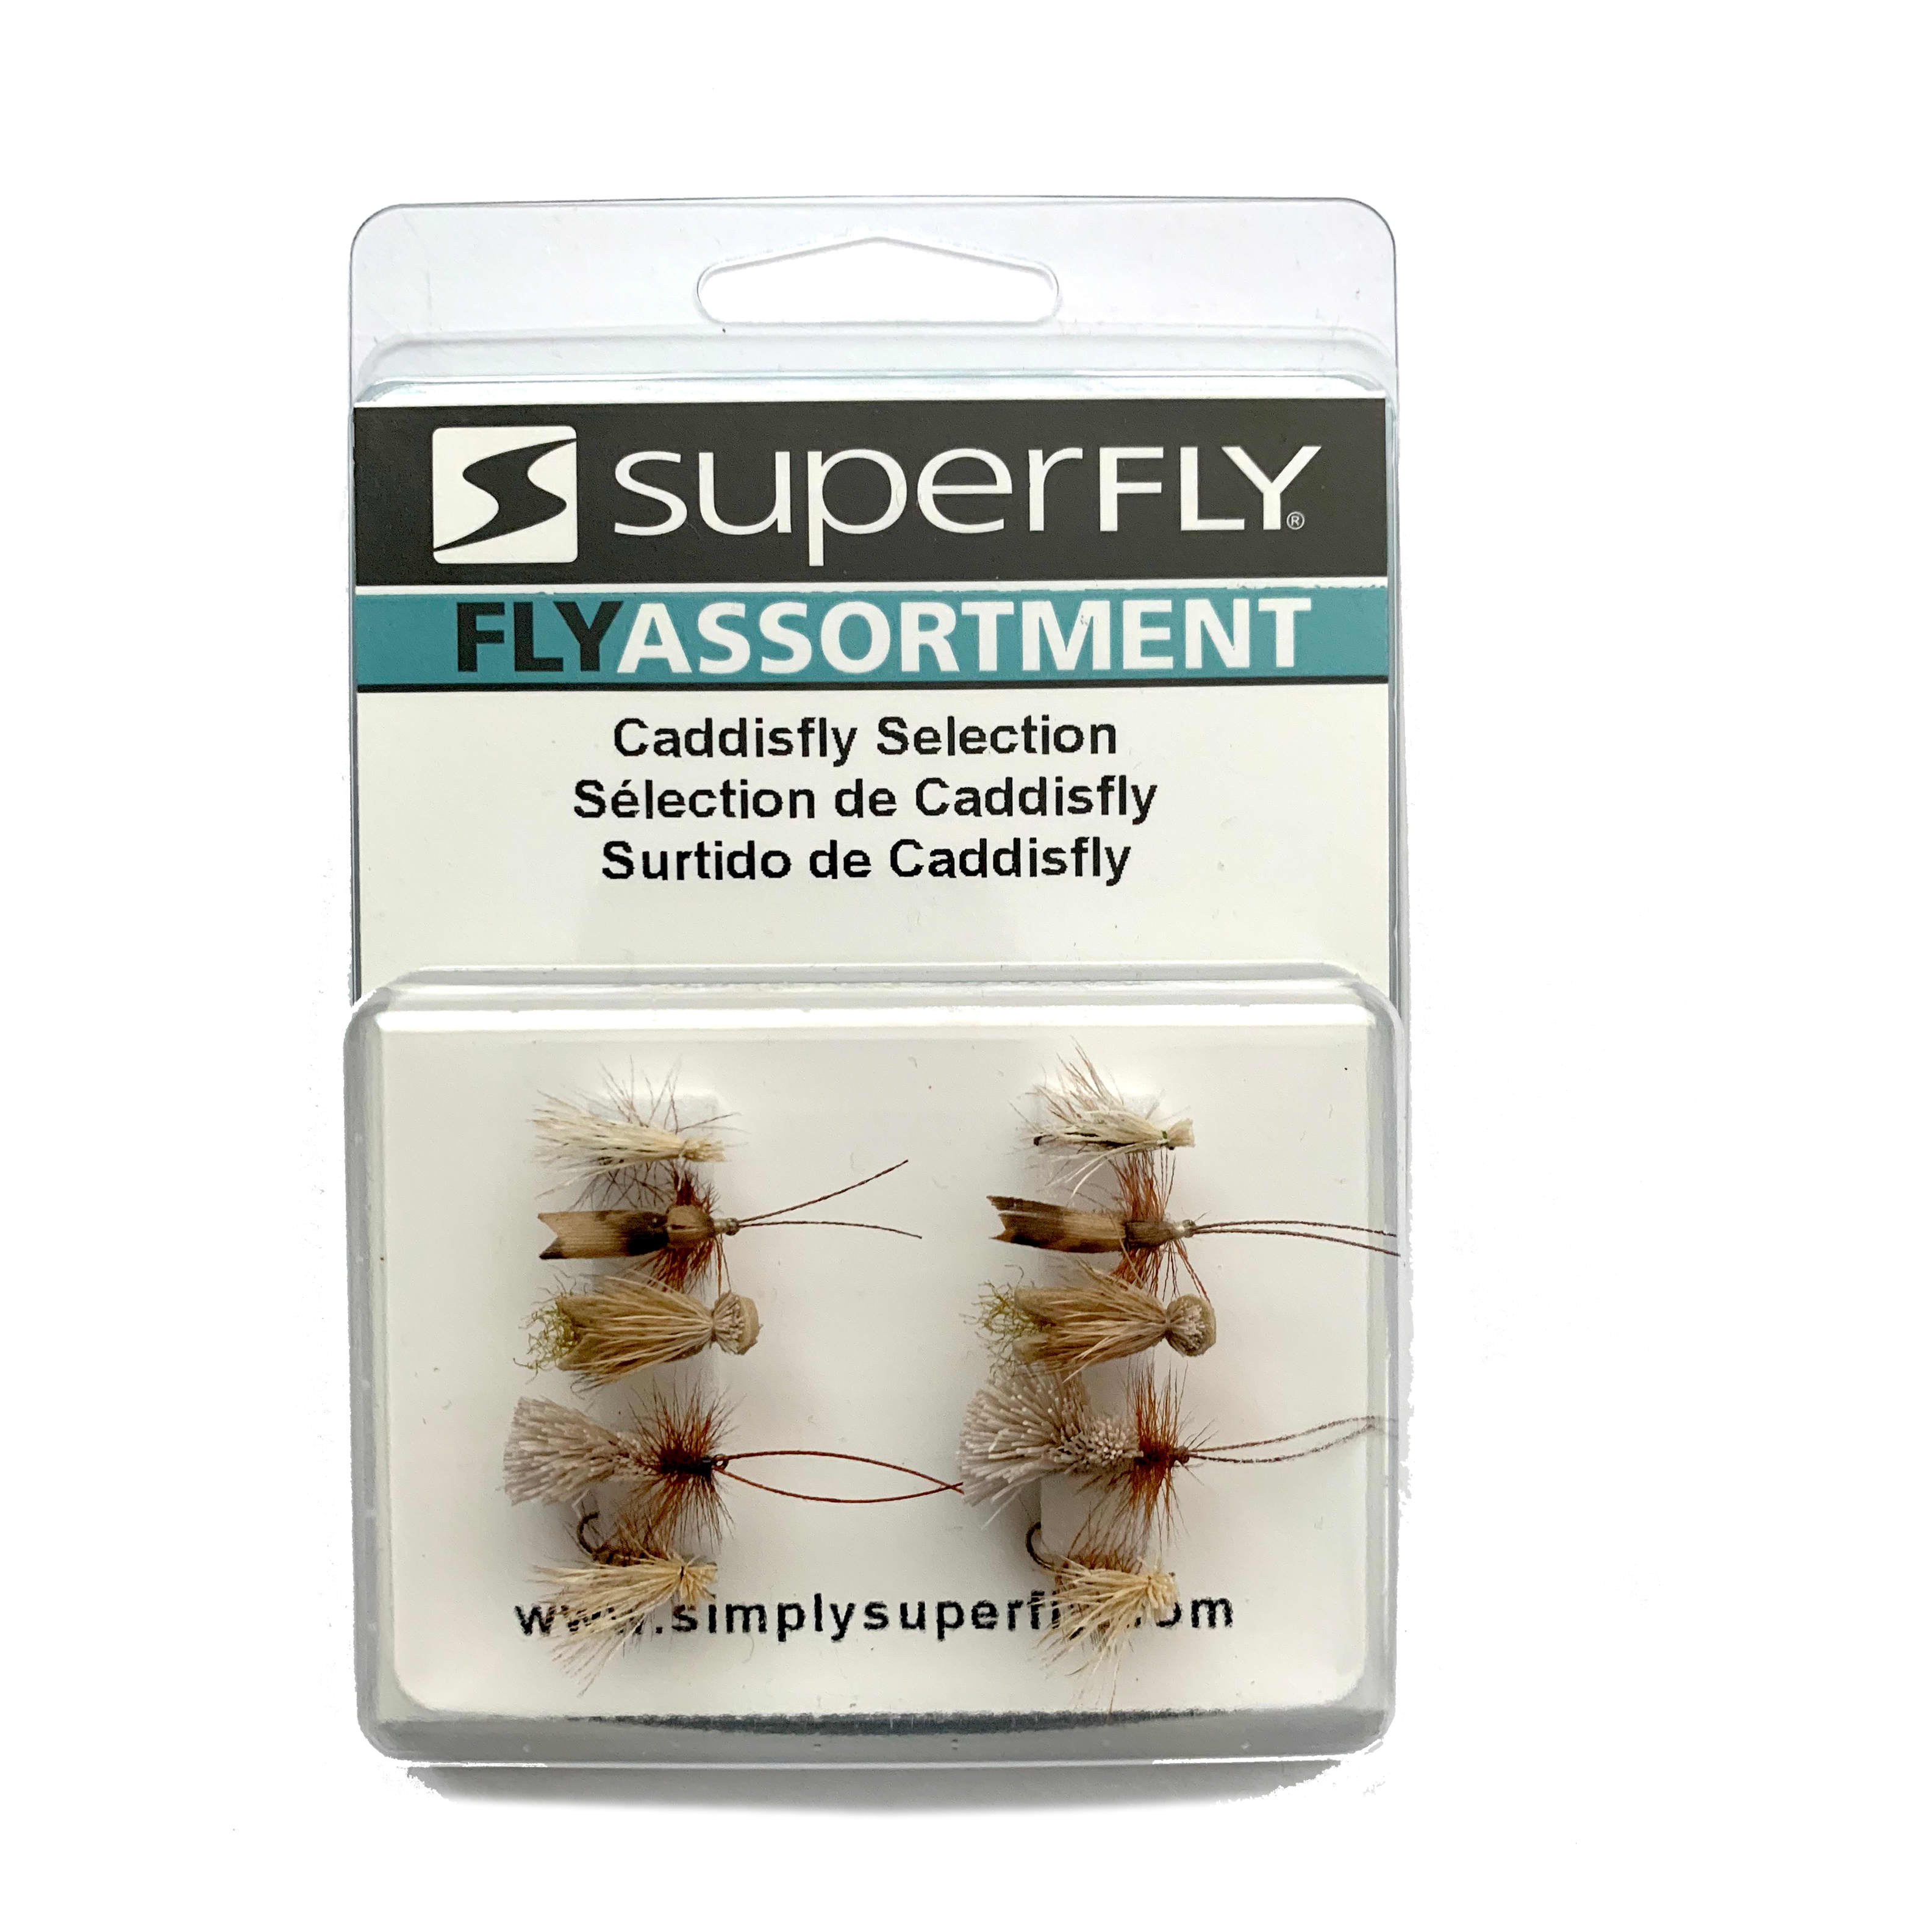 Superfly Caddisfly Selection